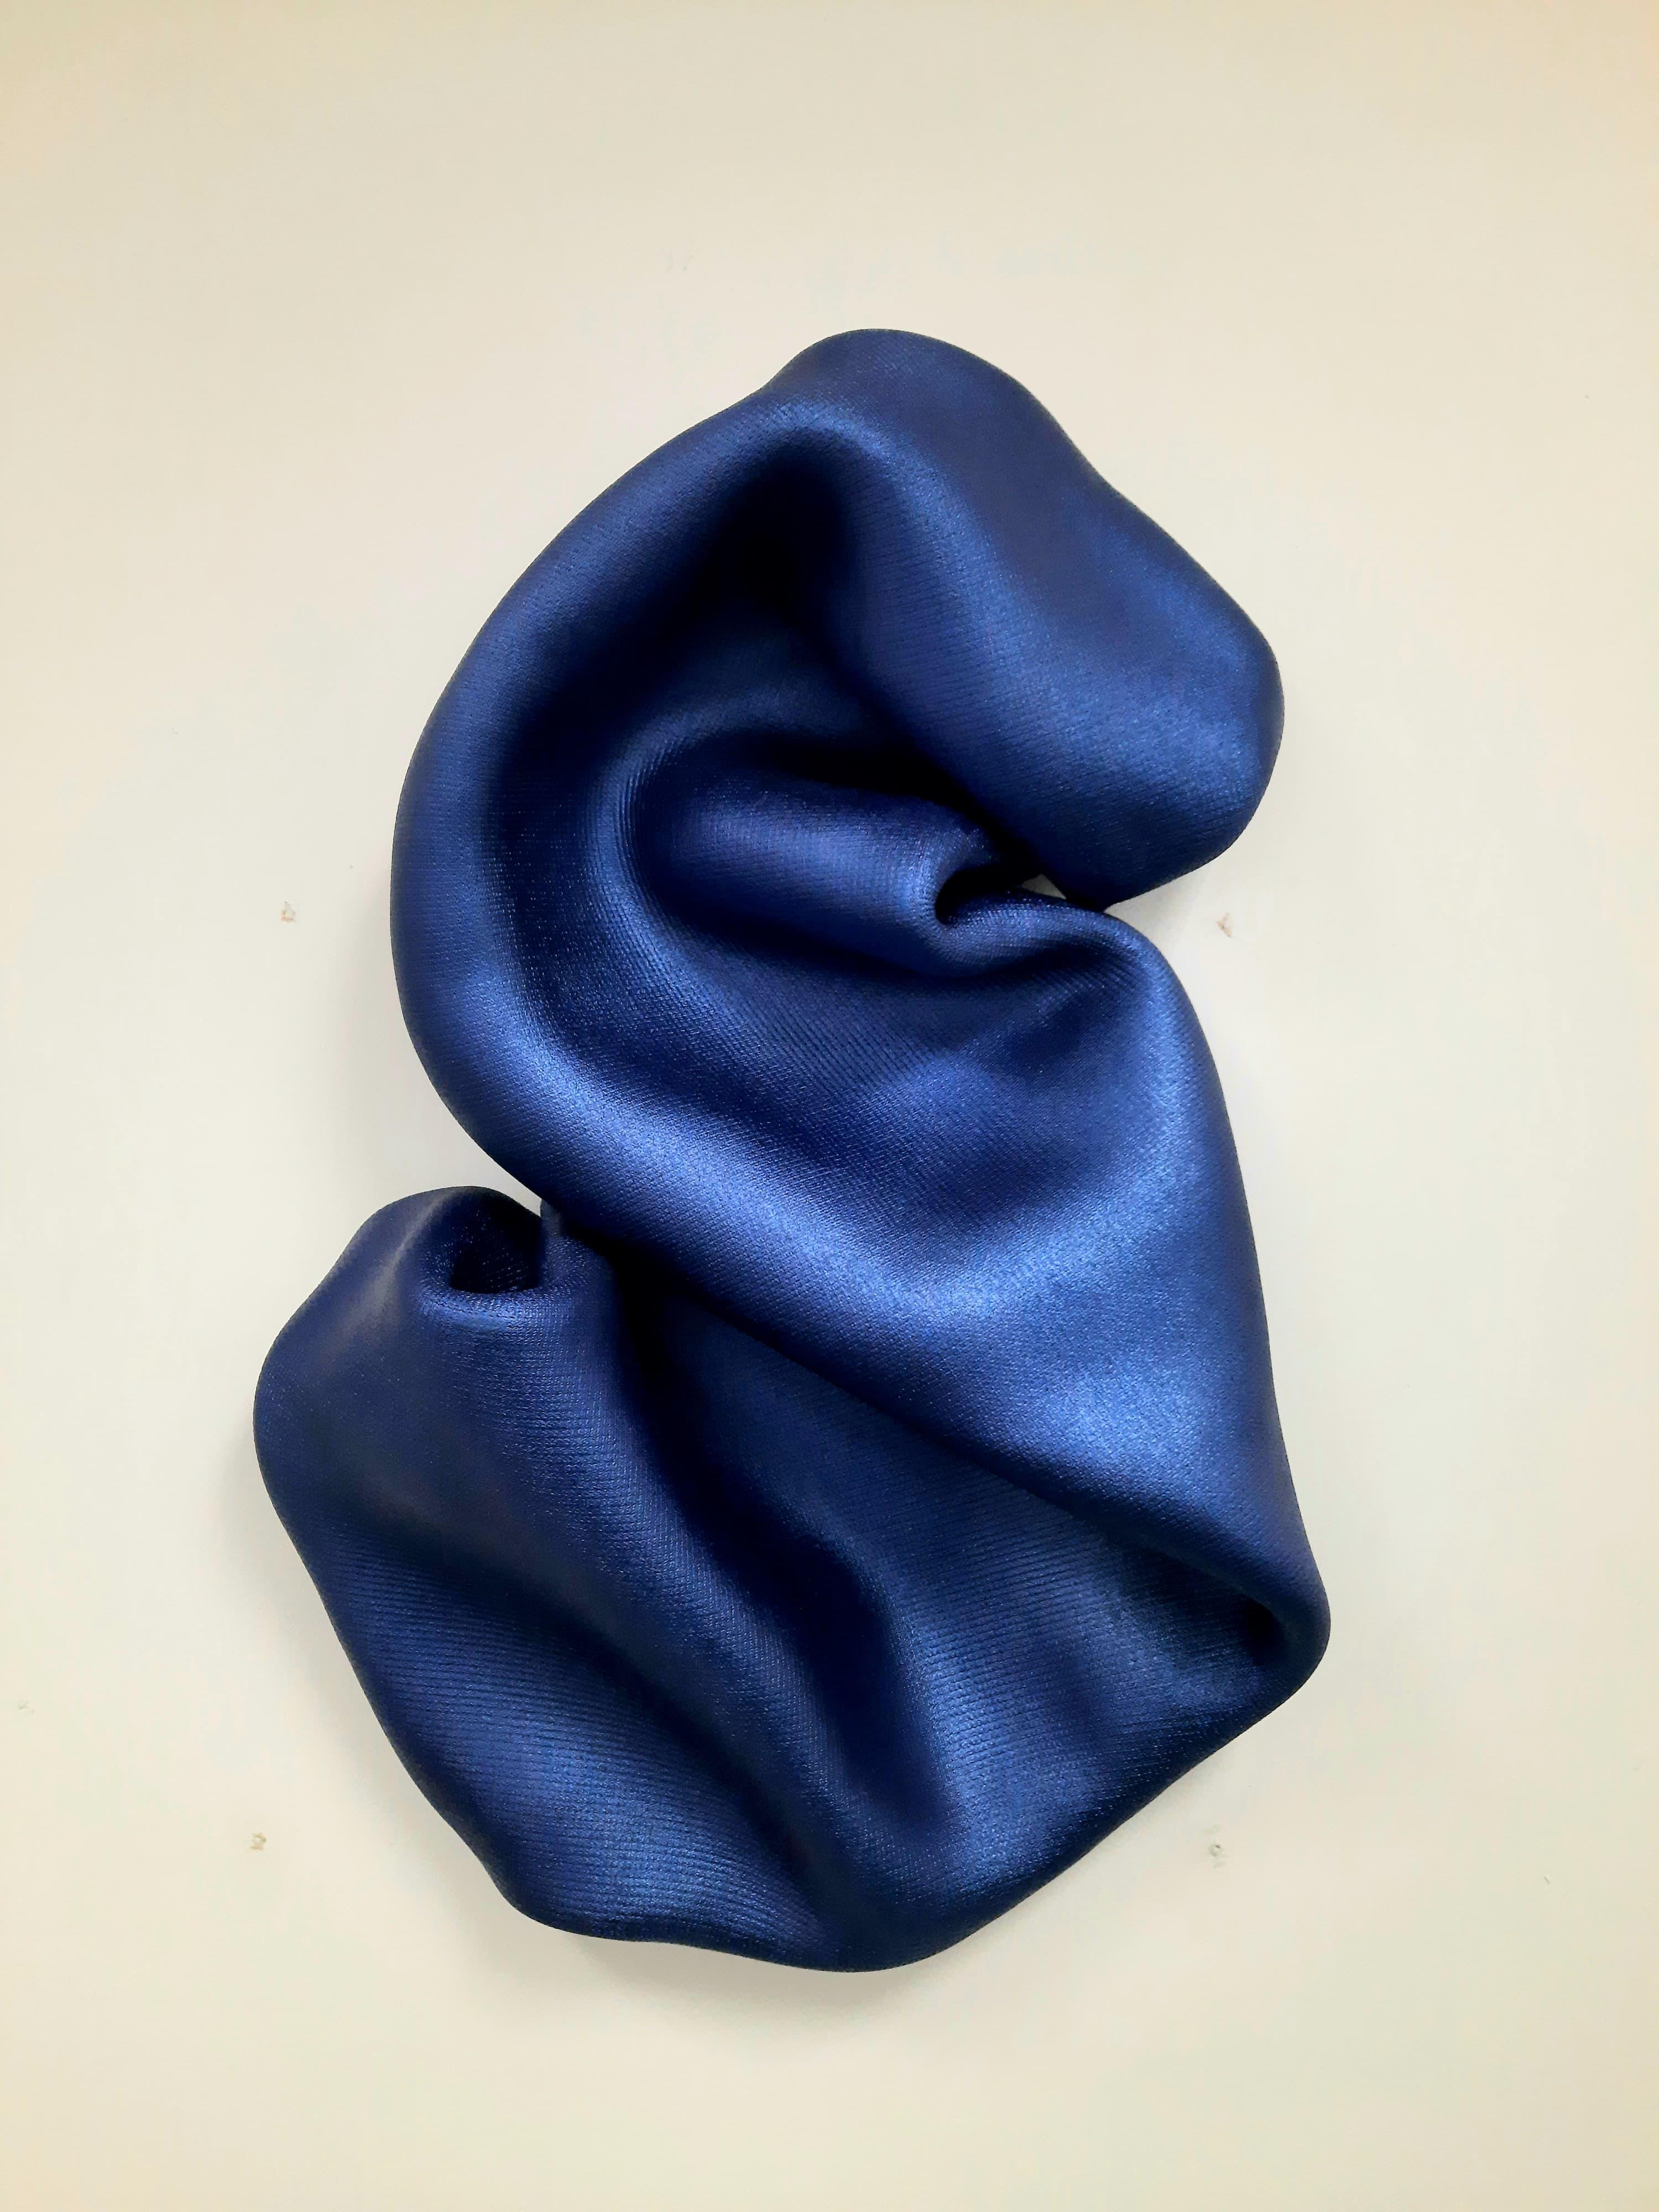 Sinuosity in blutonium (wall sculpture minimalist classic blue curvy art)